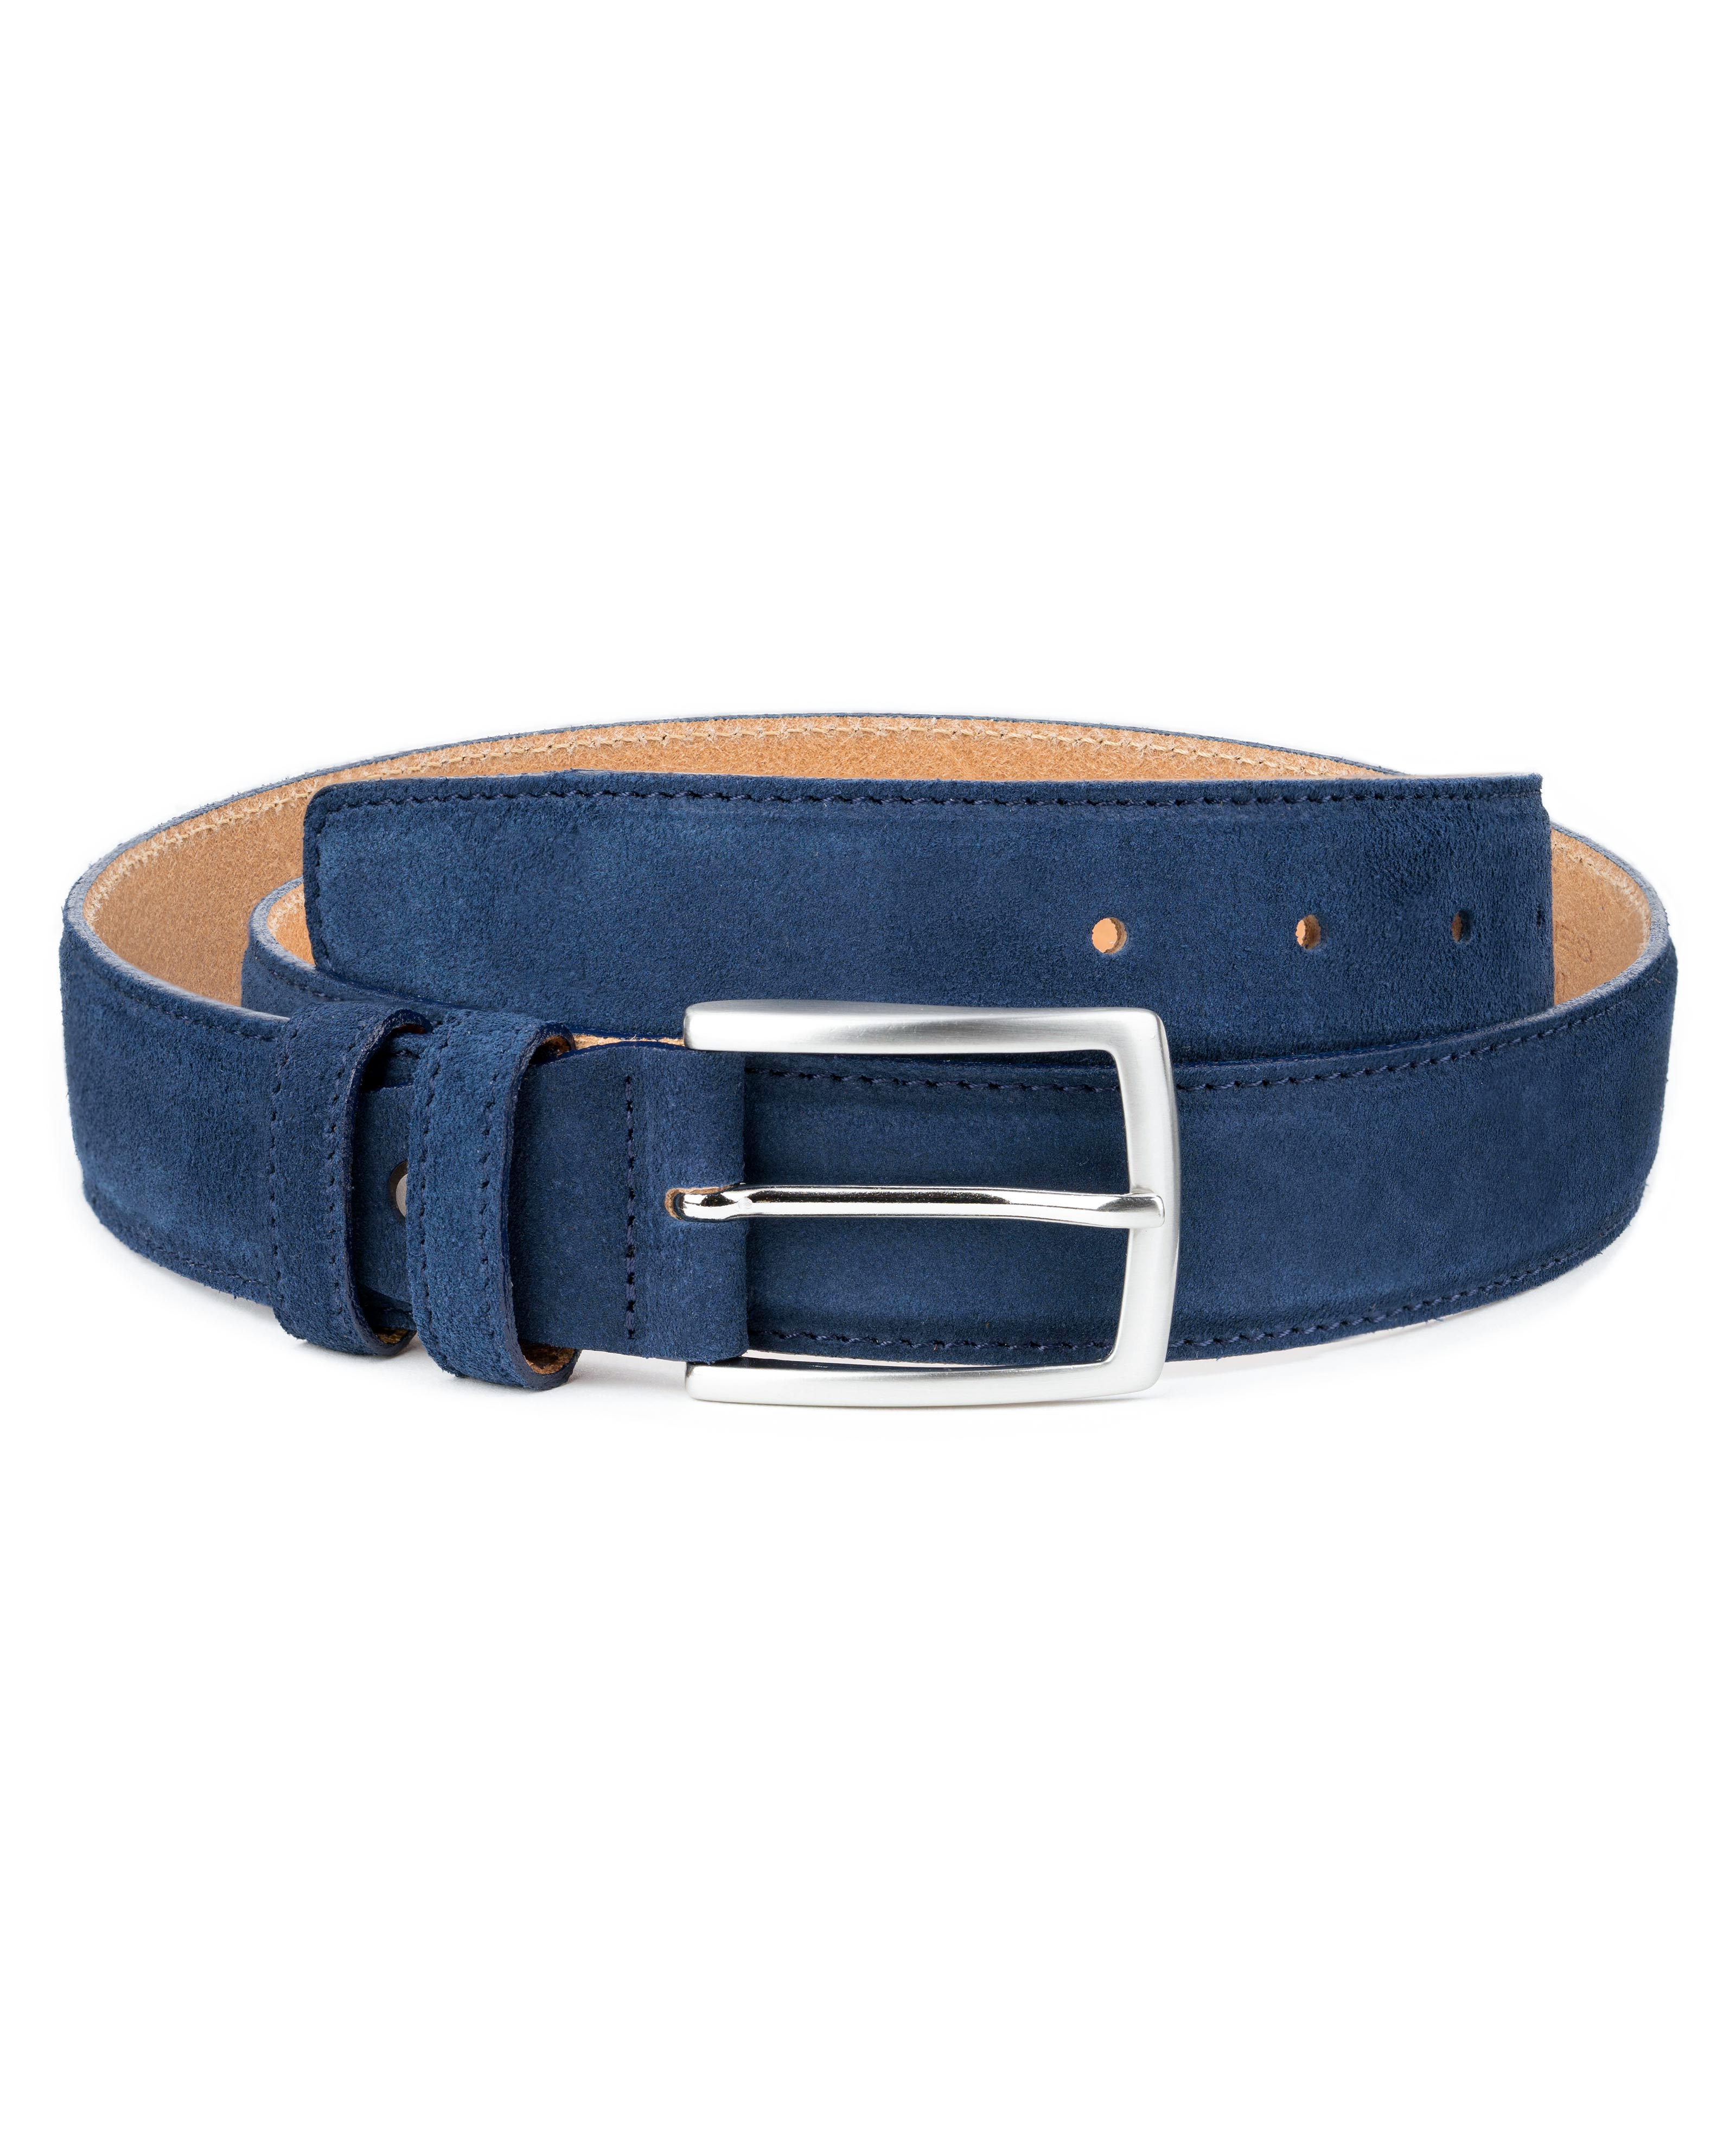 Blue leather belt.